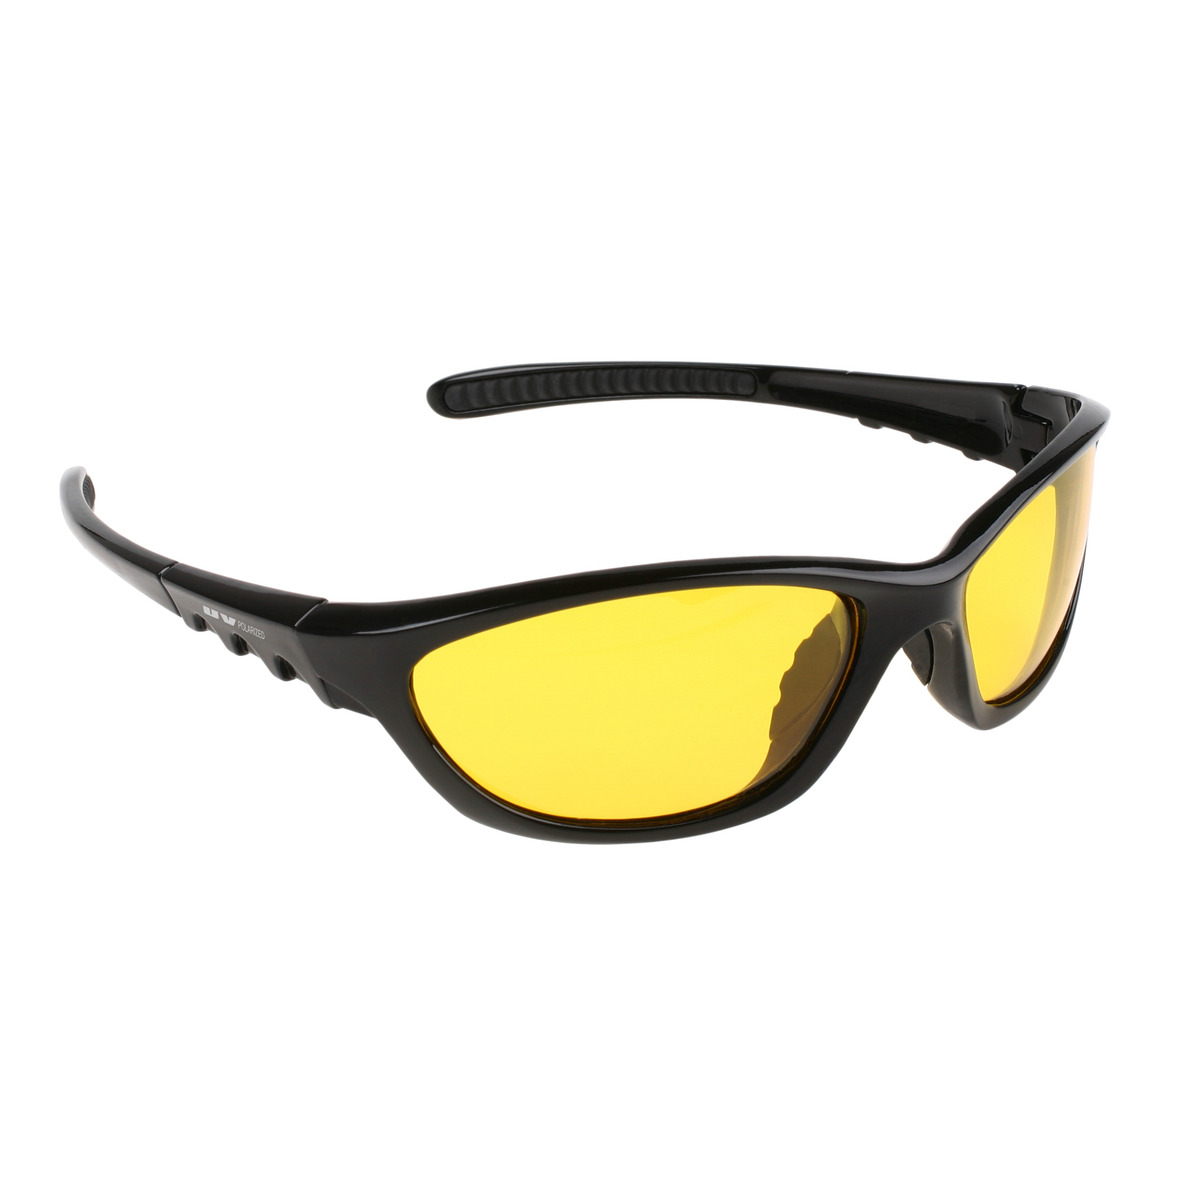 Mikado Sunglasses Polarized - 81901 YELLOW